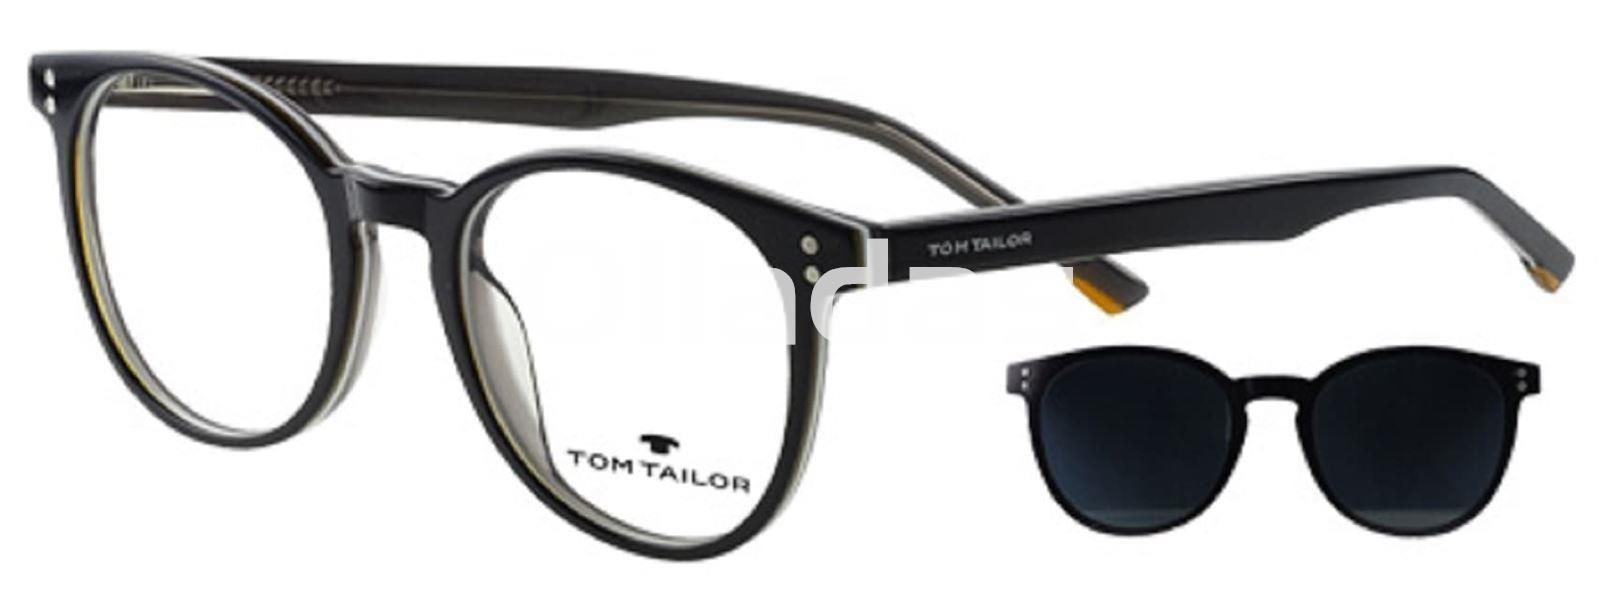 Tom Tailor 60572. - Imagen 1